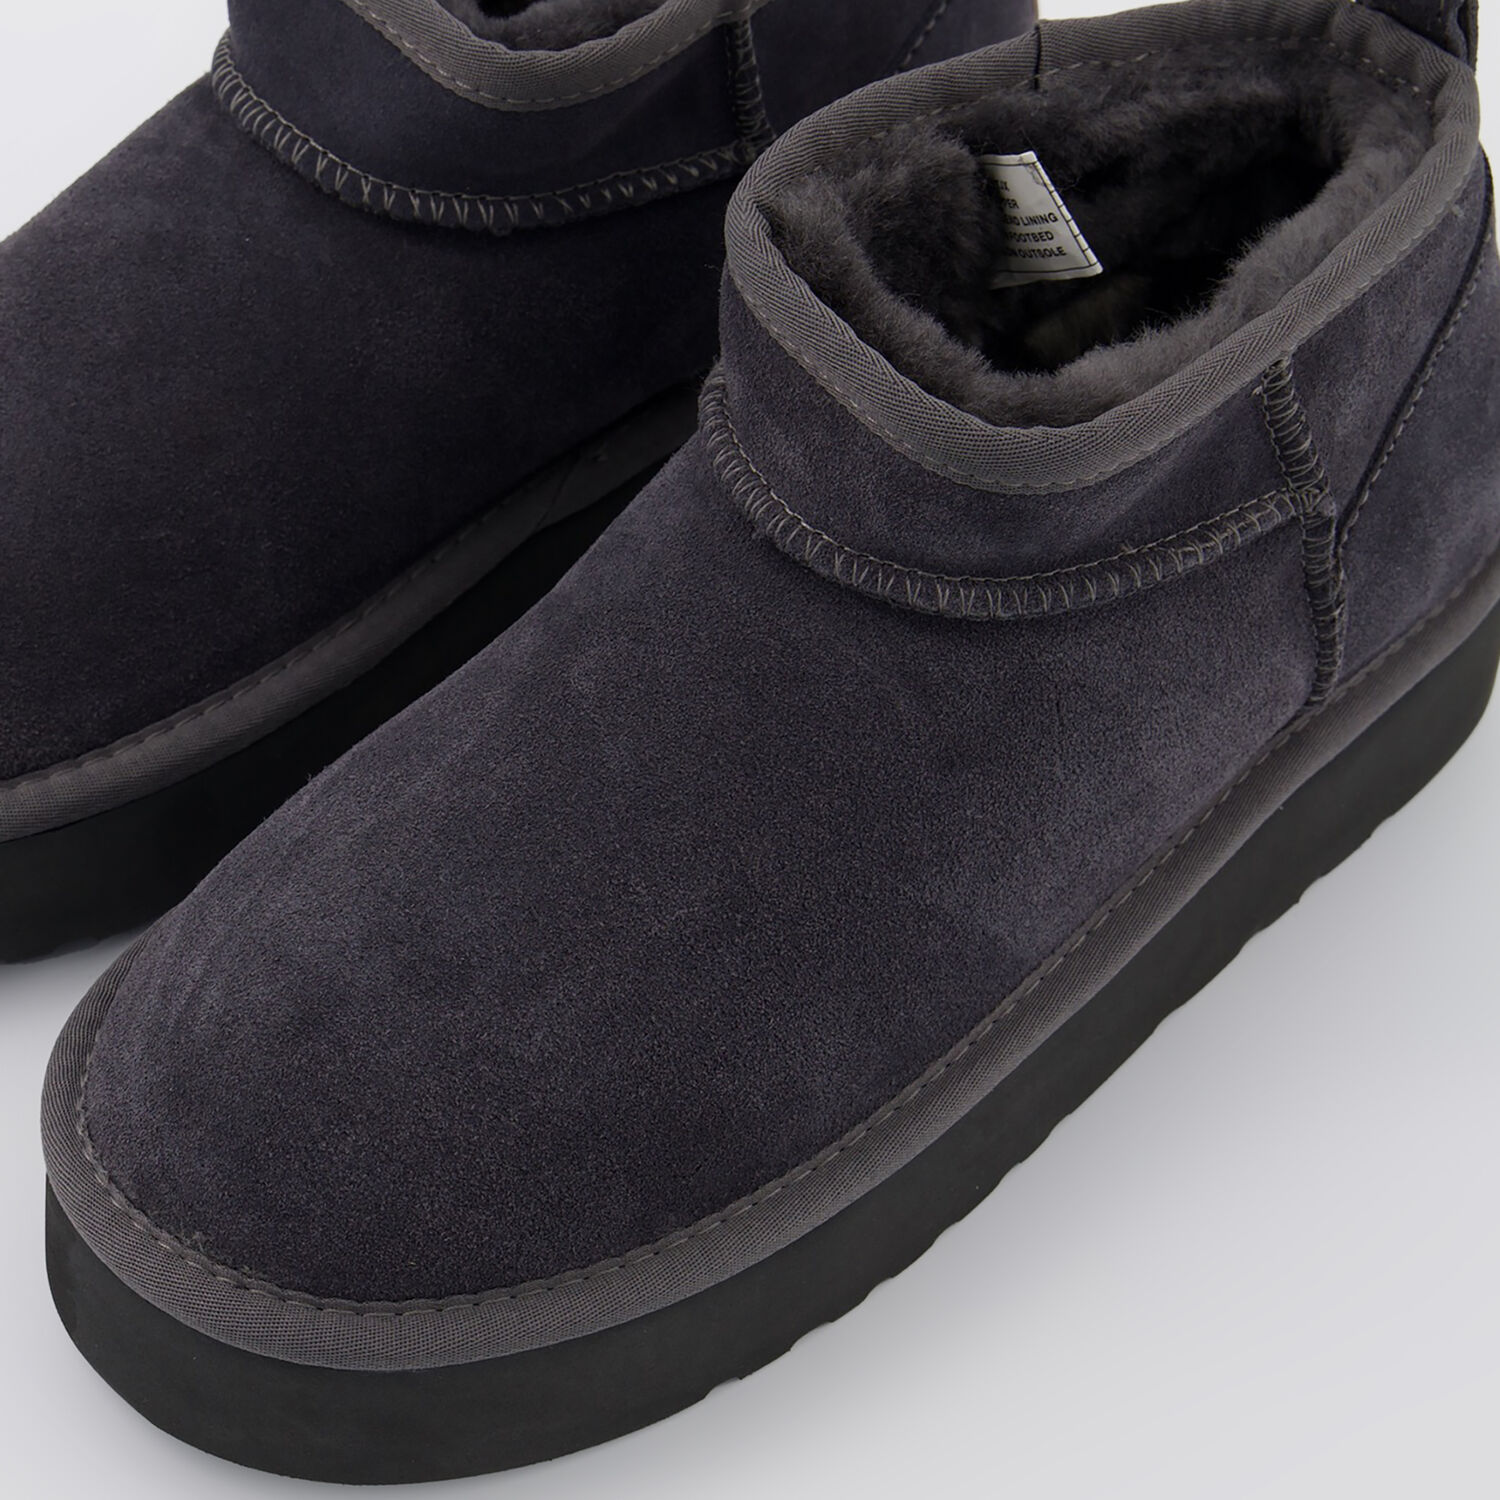 Grey Leather Mini Platform Slippers - TK Maxx UK